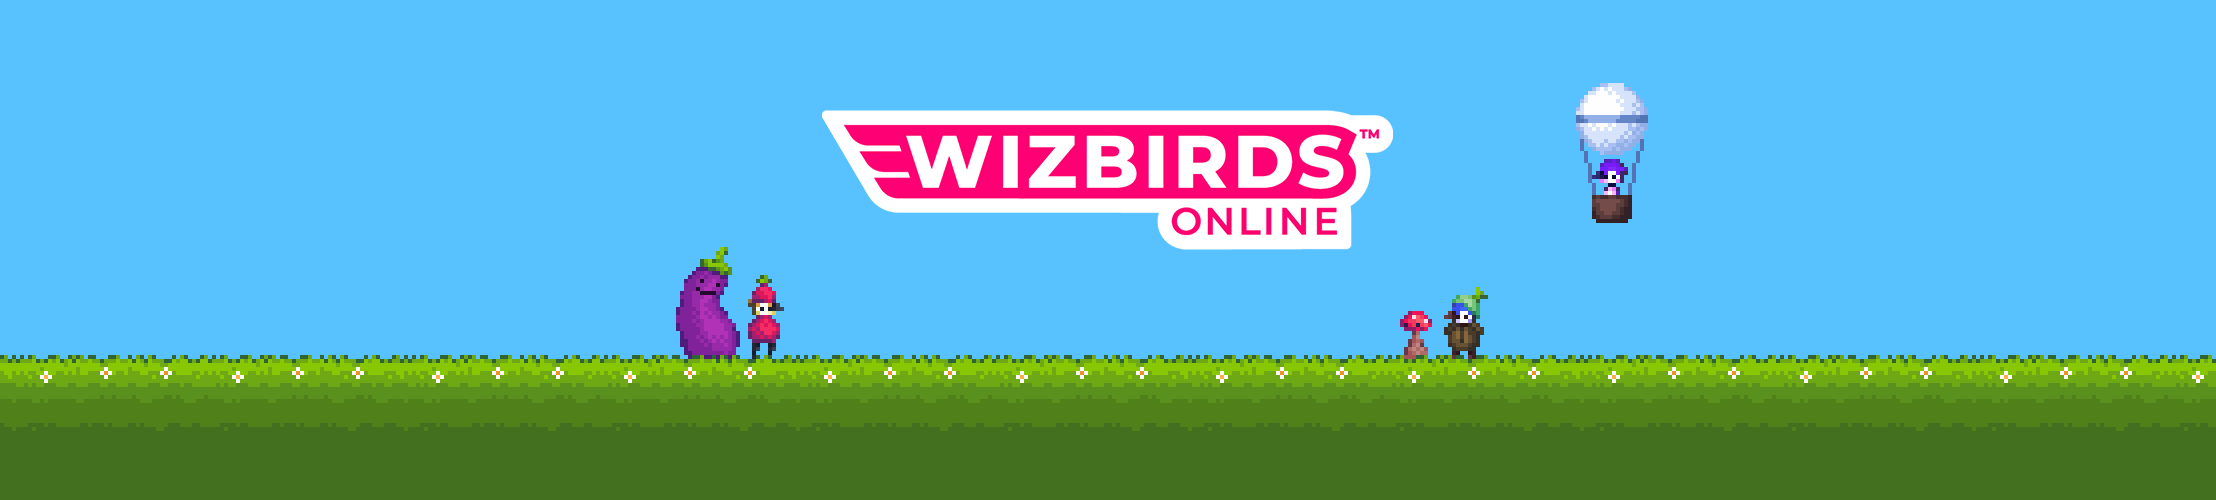 Wizbirds Online